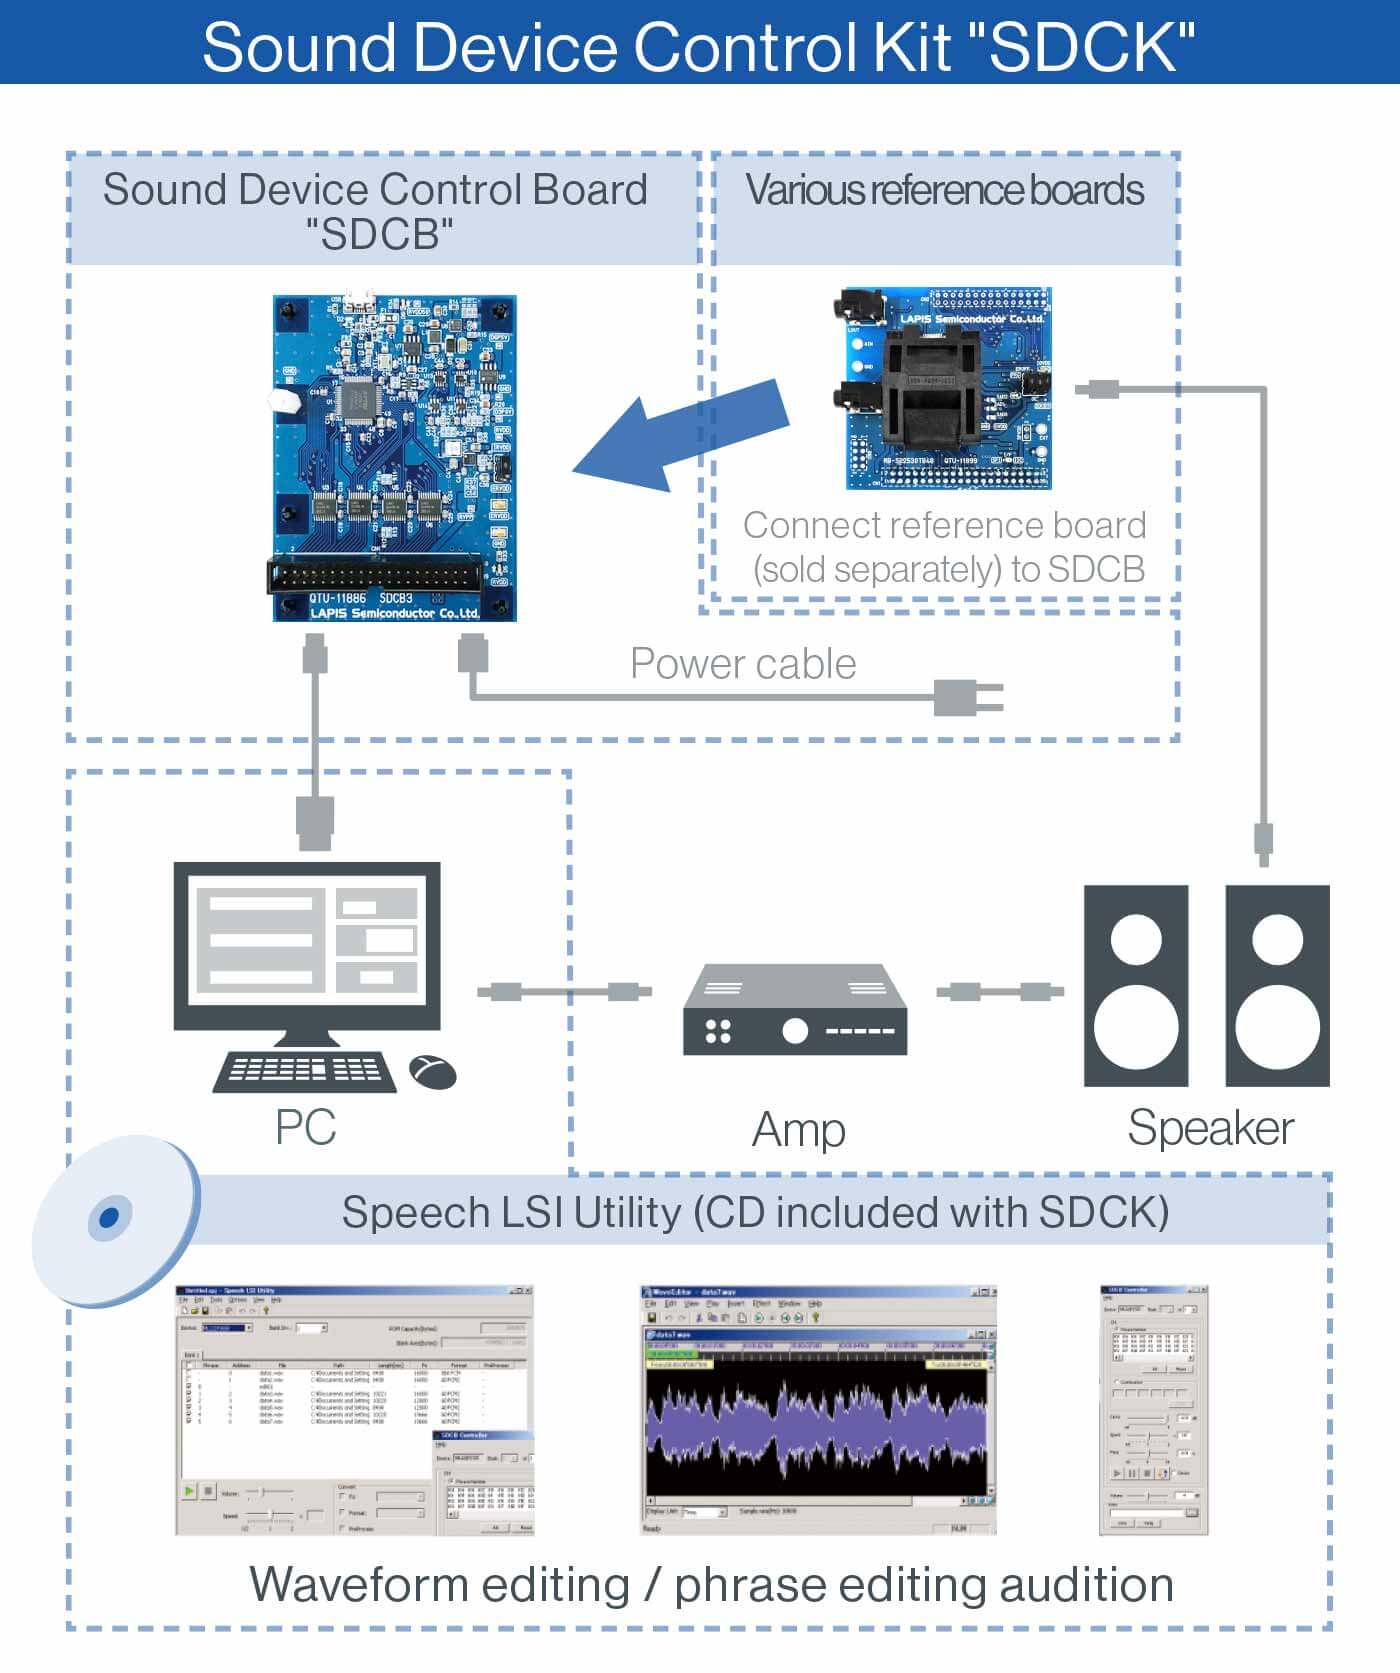 SDCK Sound Device Control Kit Overview